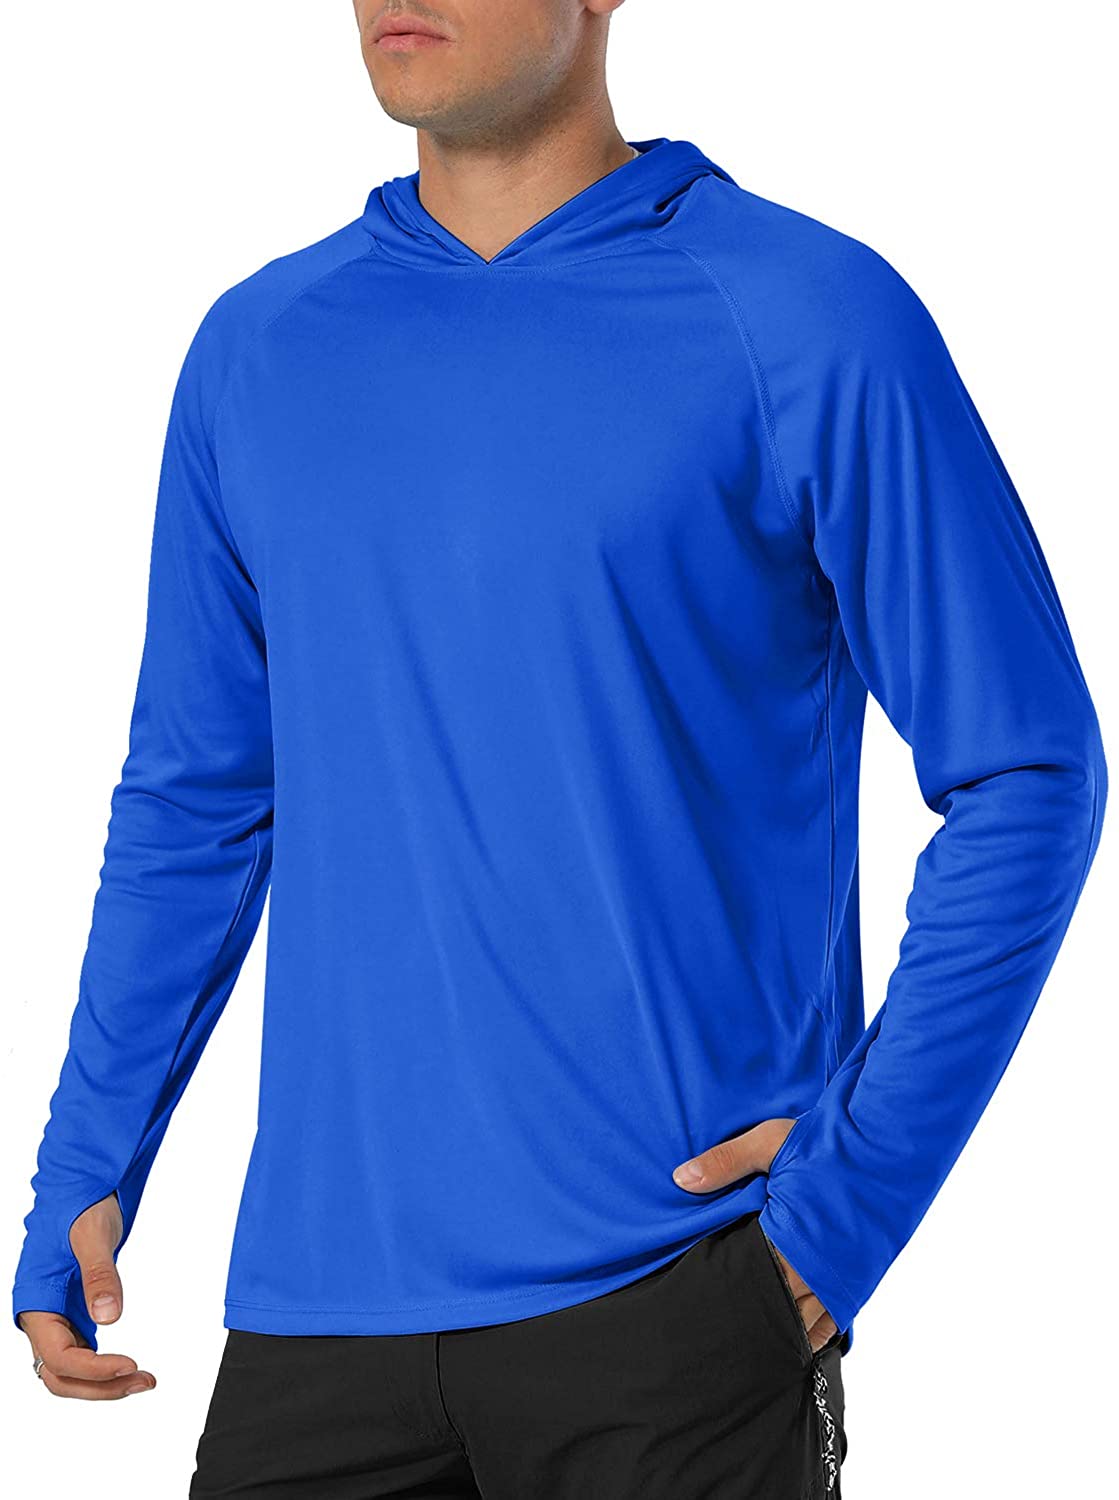 TACVASEN Men's Hiking Shirts UPF 50 UV Sun Protection Athletic Hoodies Workout Training Shirts